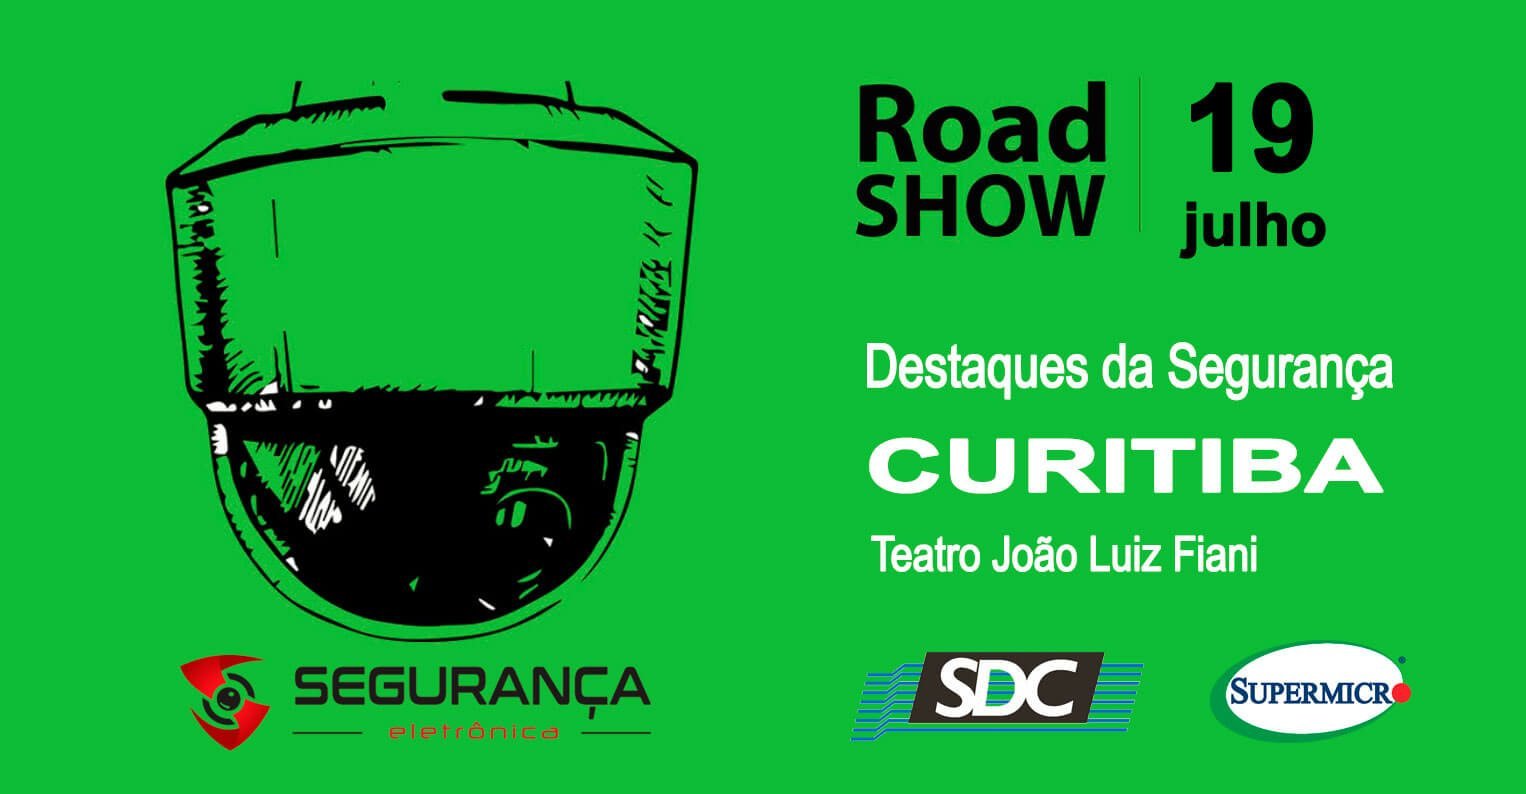 Roadshow_curitiba